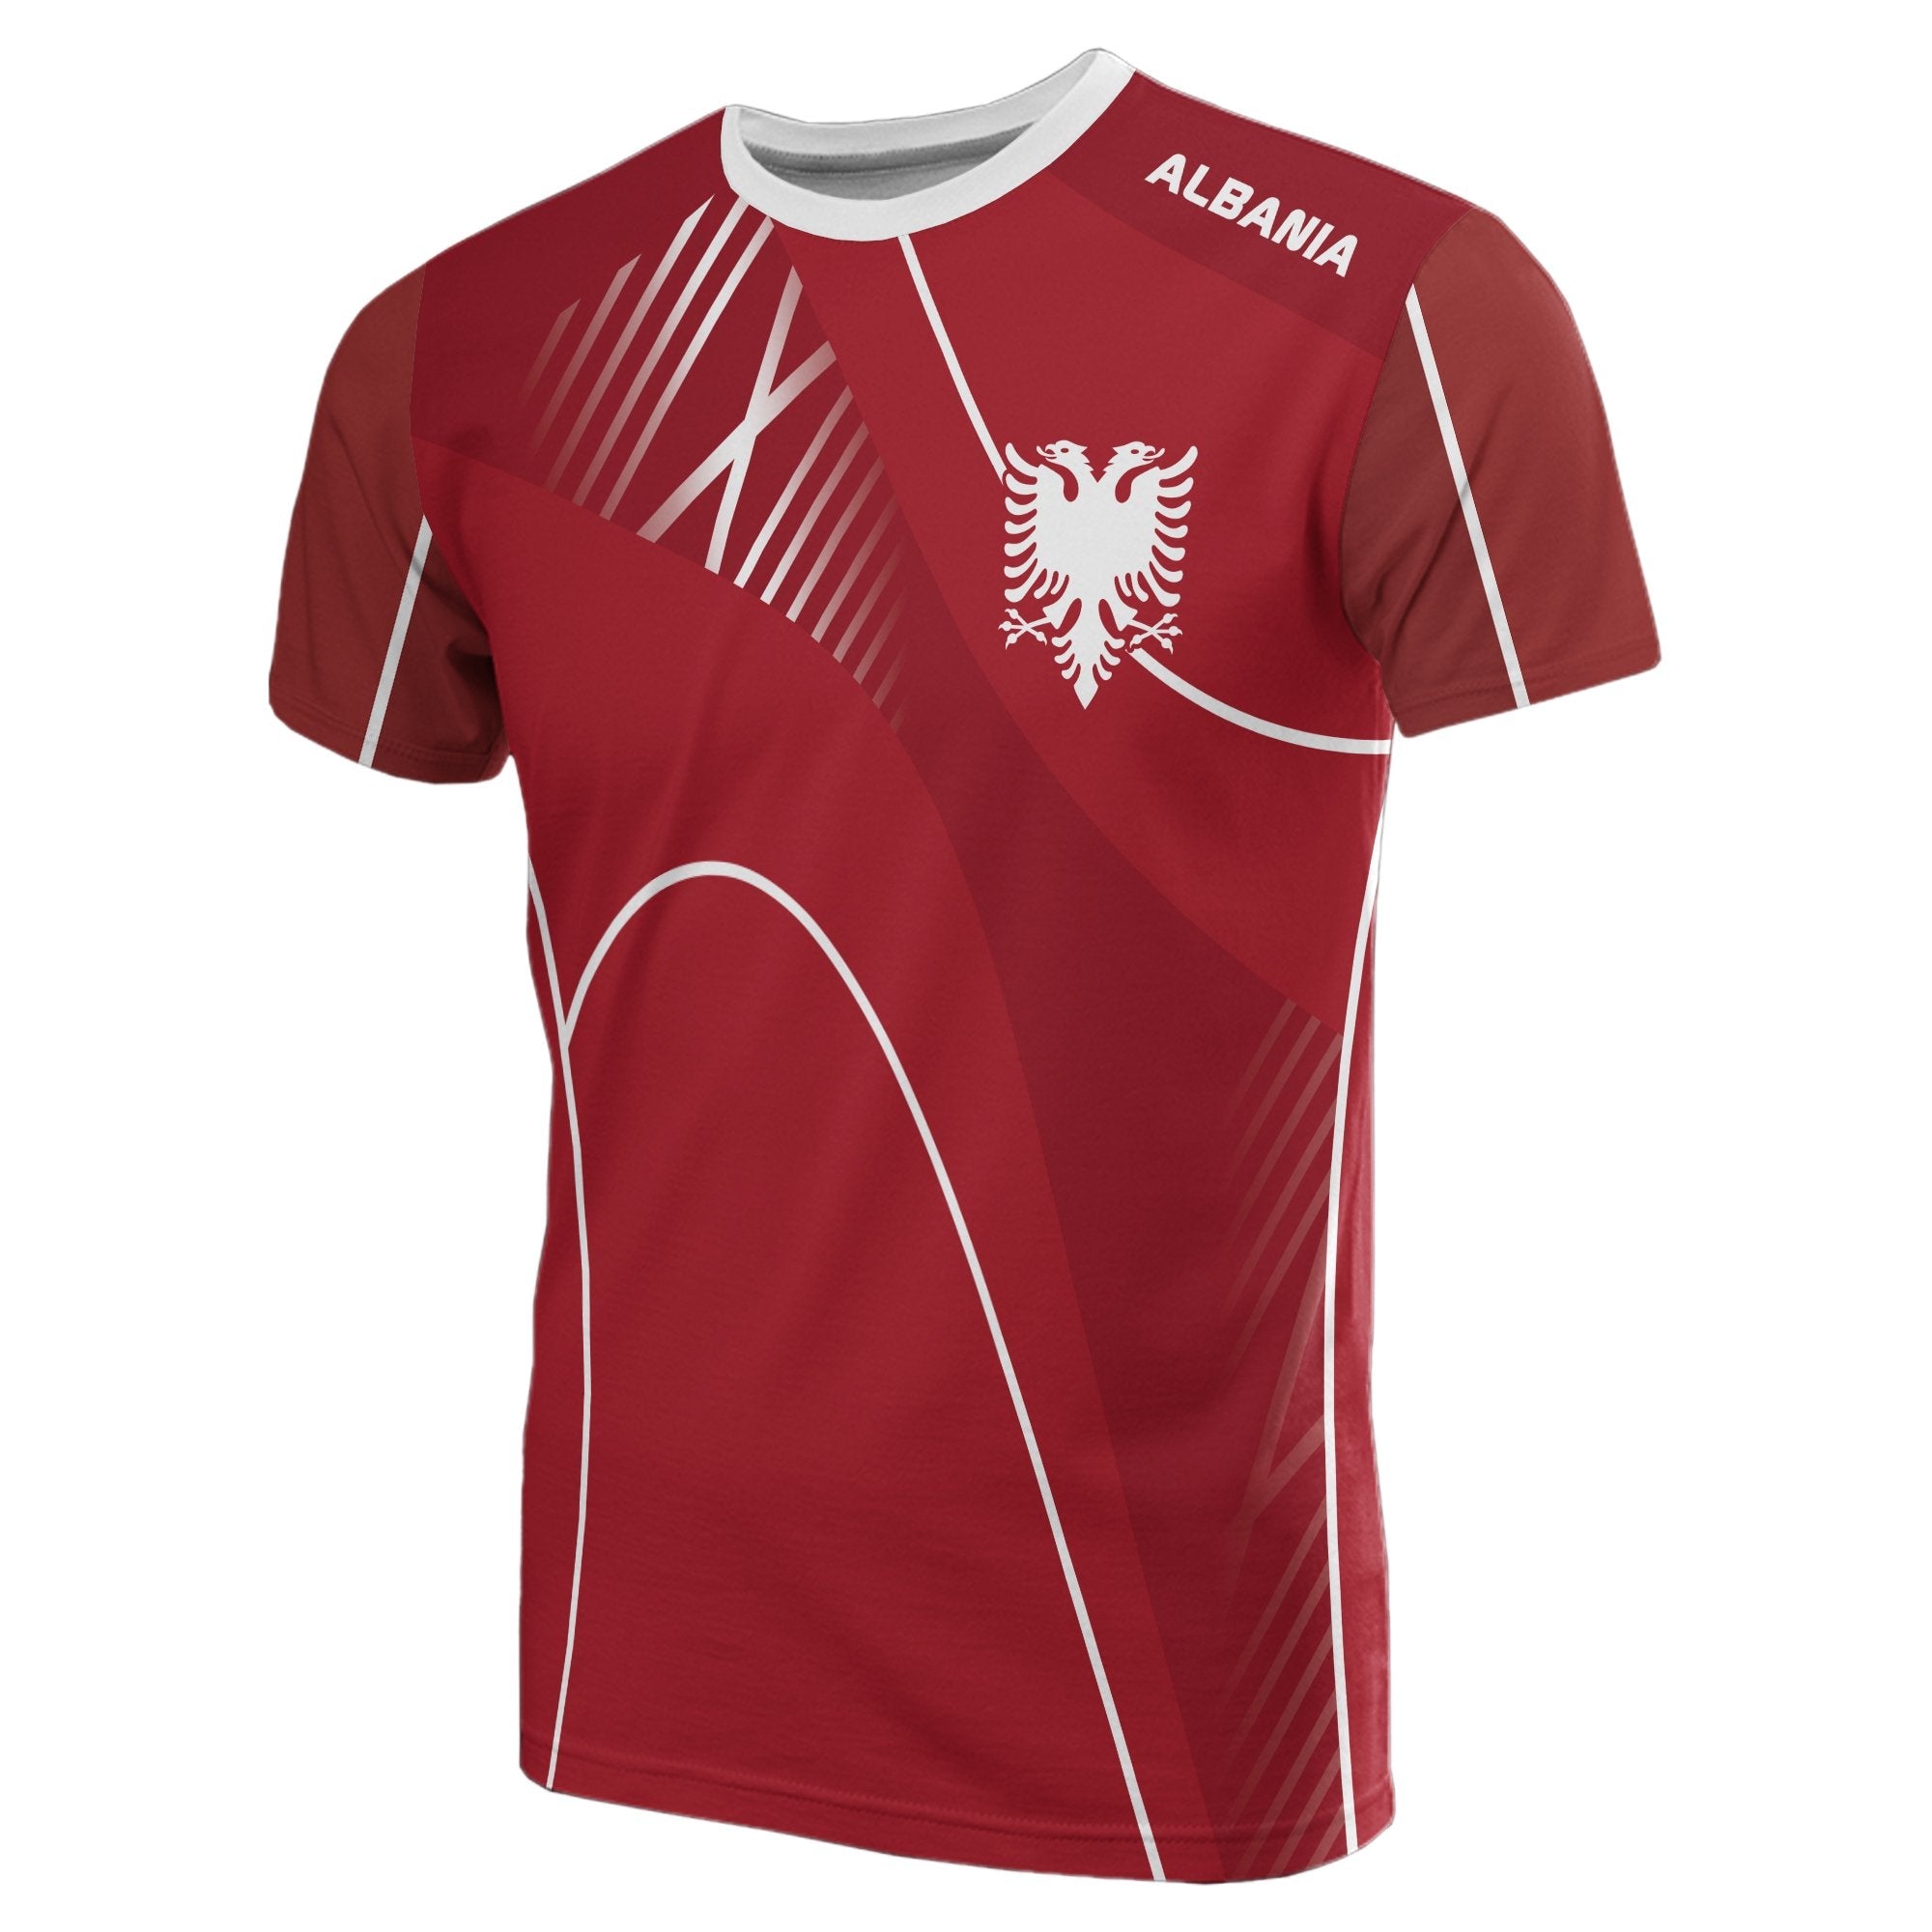 albania-t-shirt-increase-version